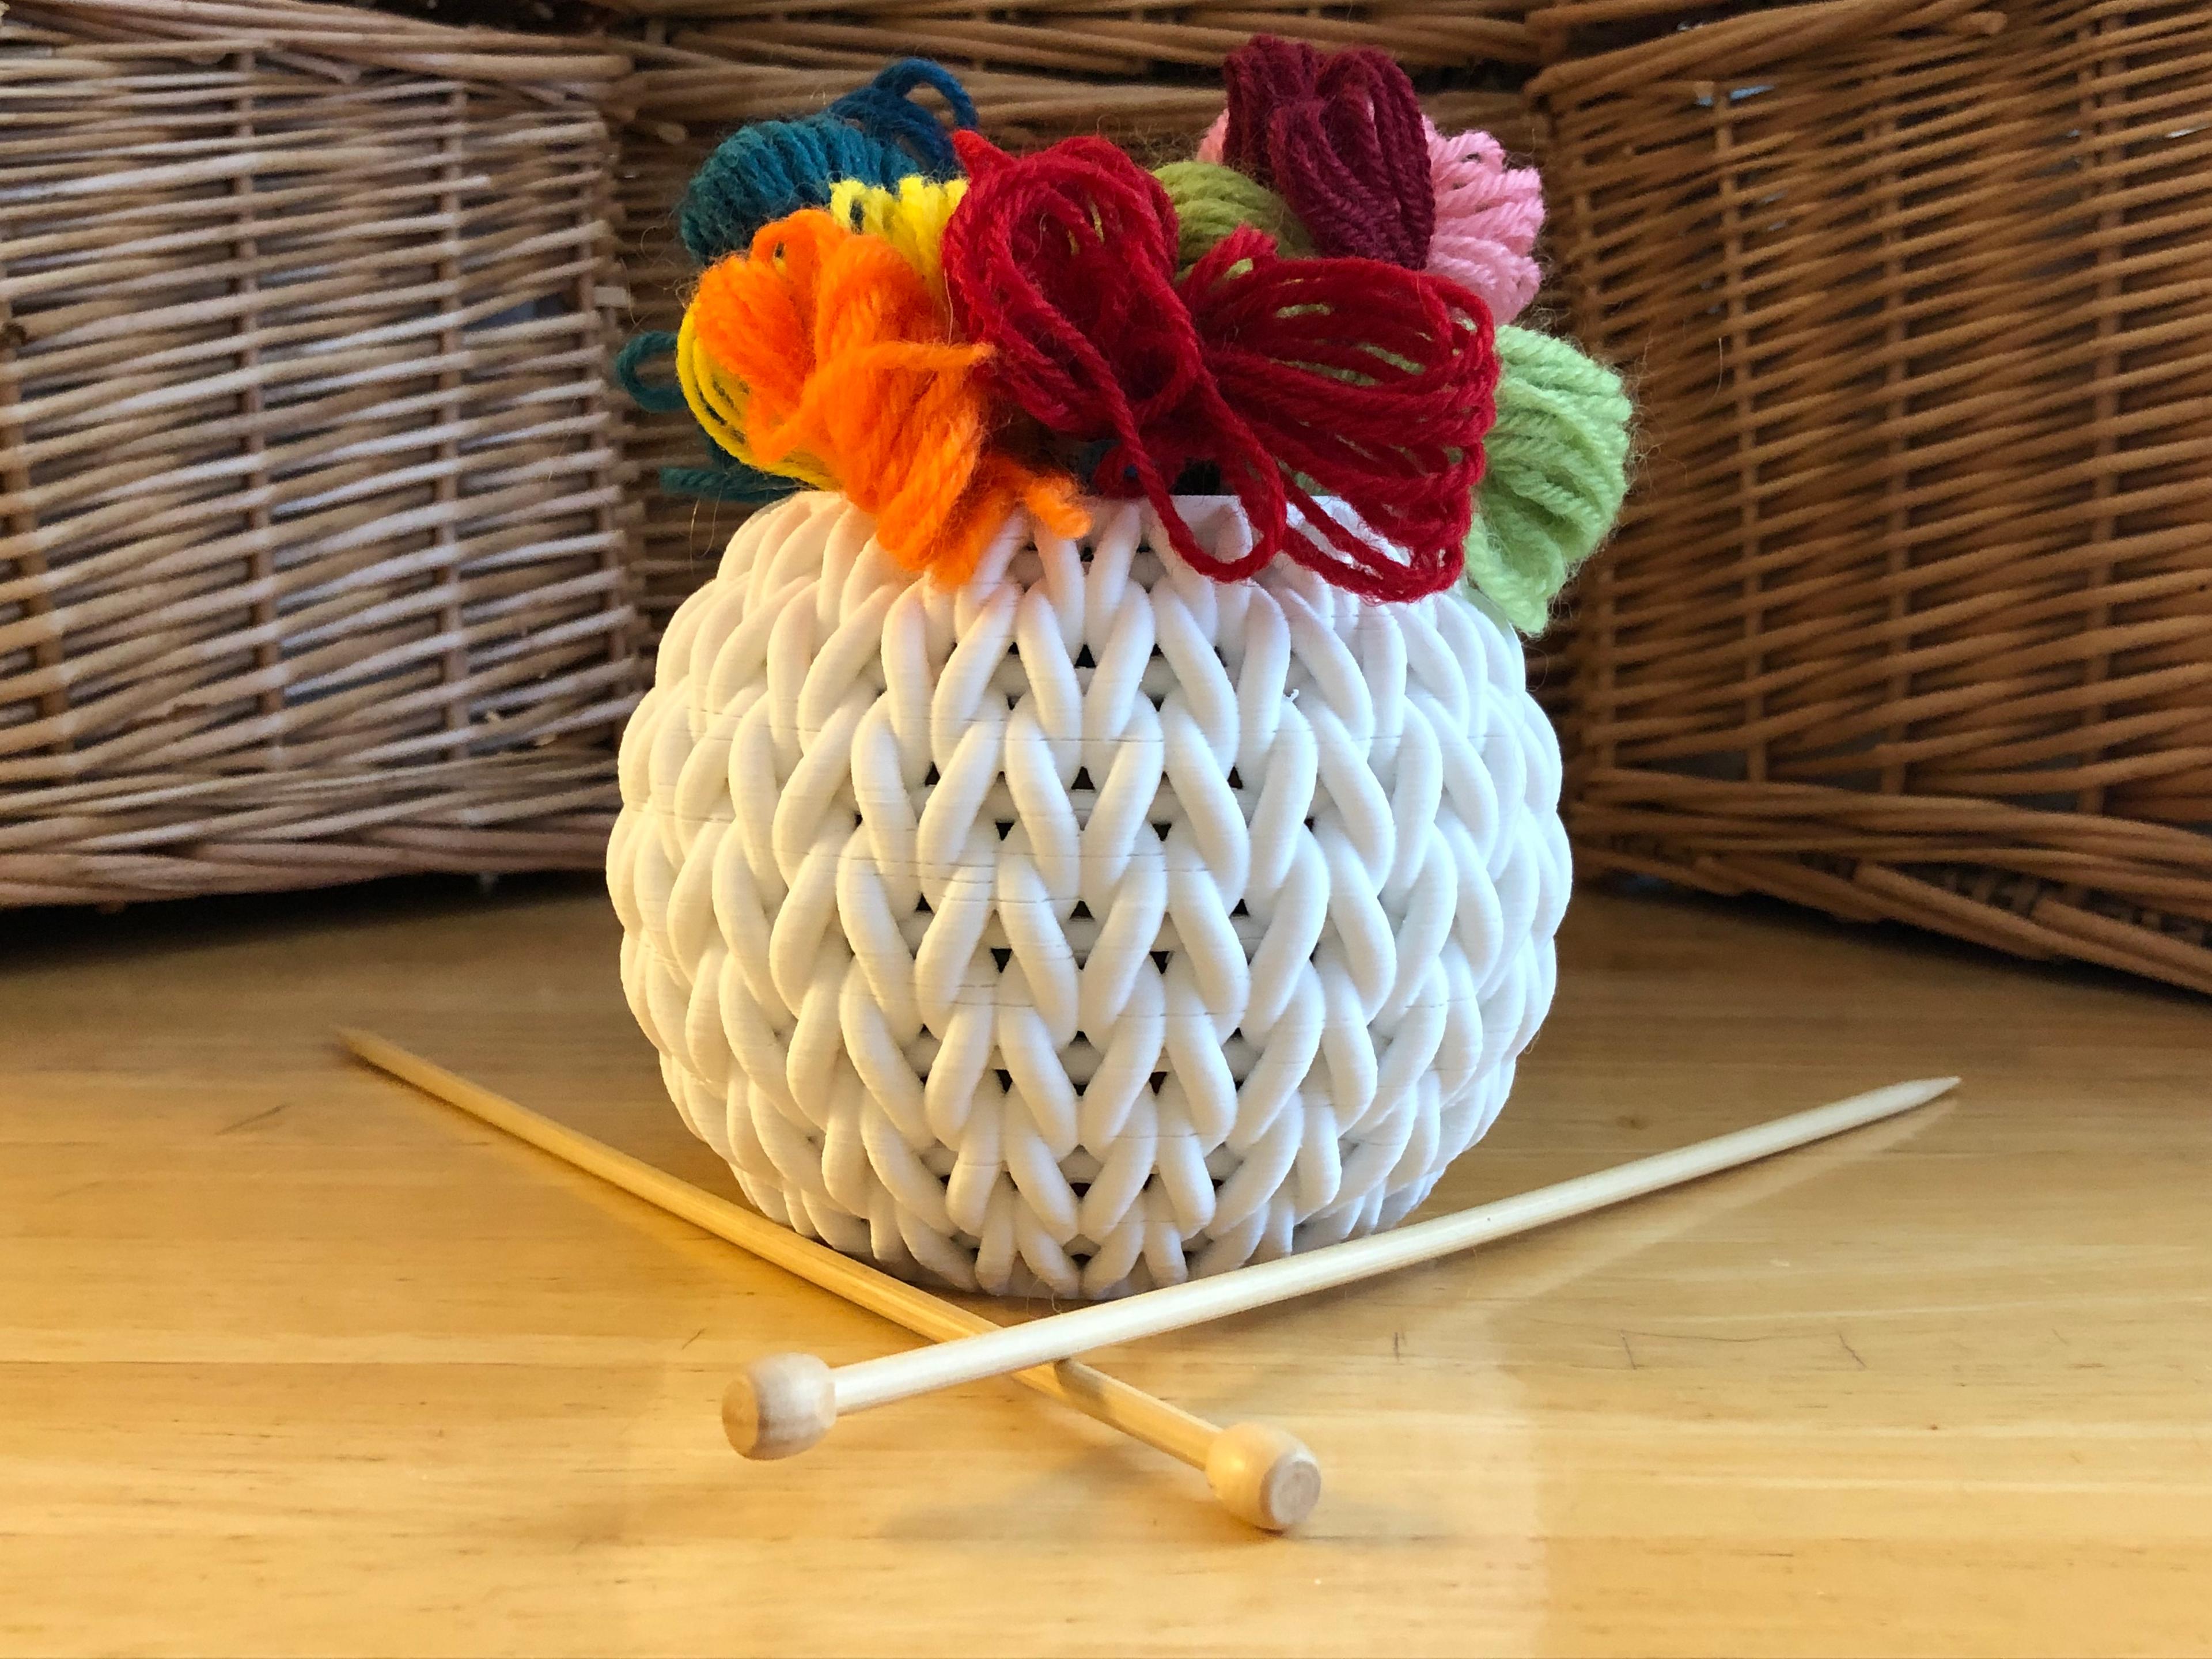 Knitted Bowl 3d model